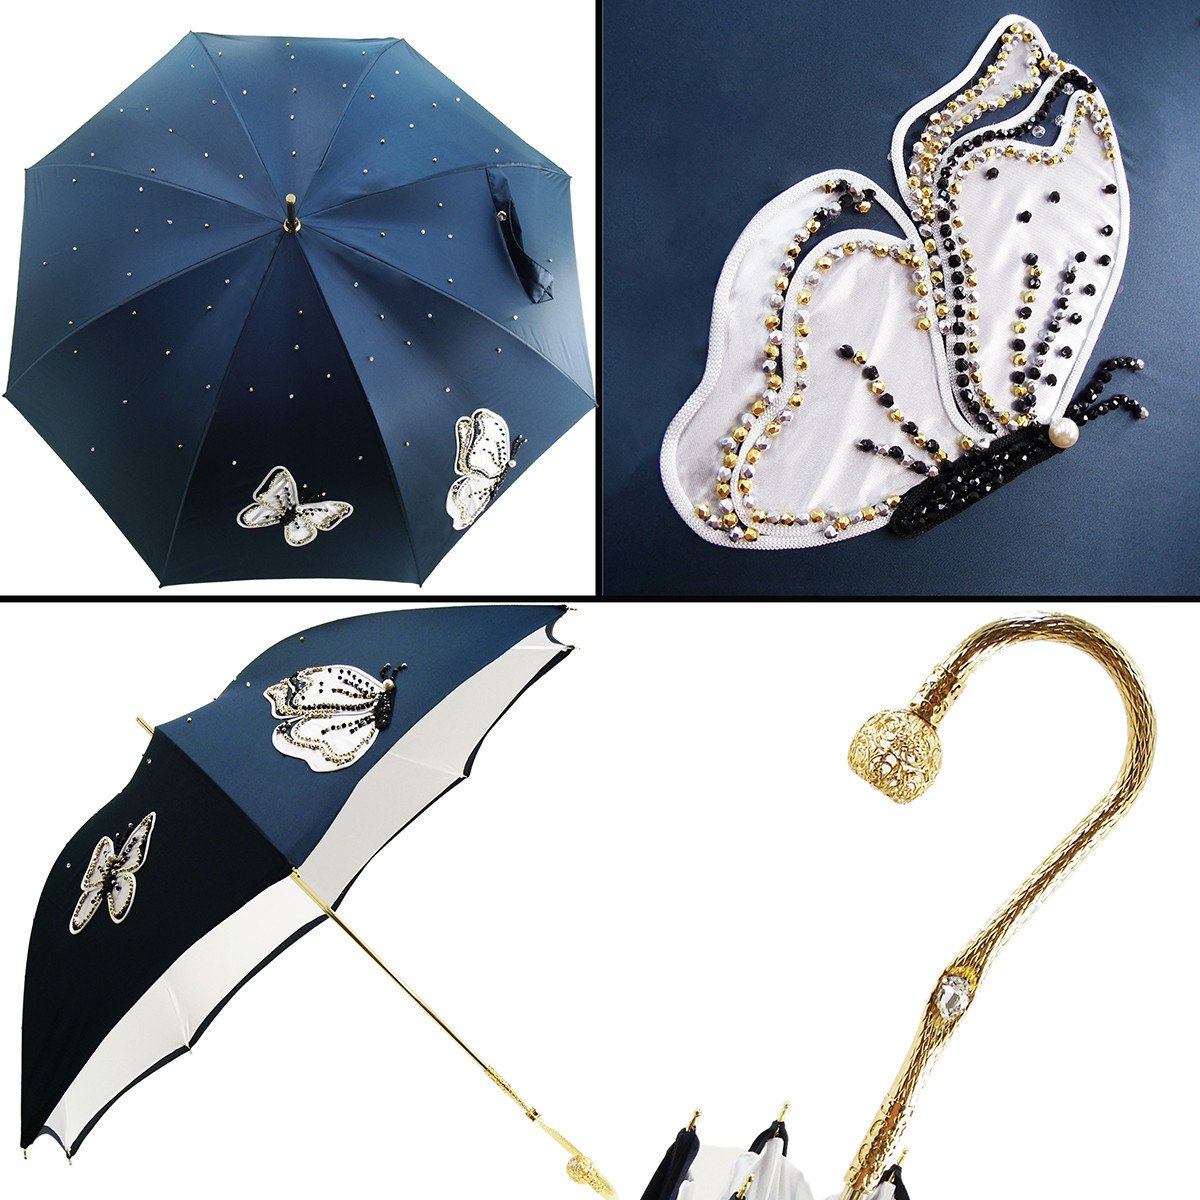 Fantastic Women's Umbrella with Embroidered Butterflies - il-marchesato